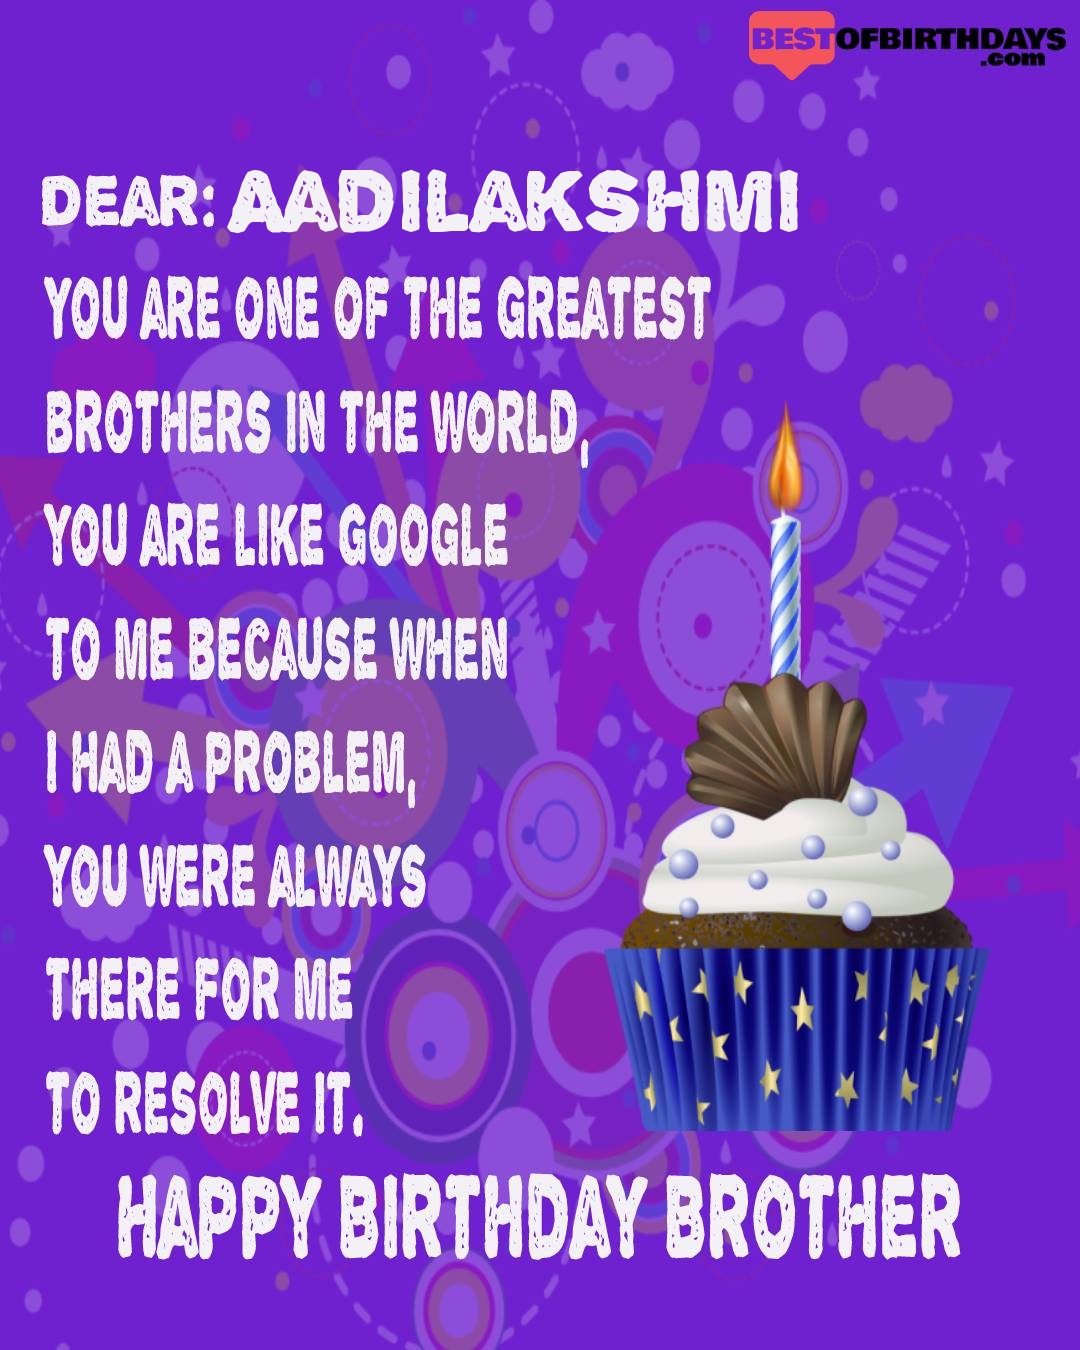 Happy birthday aadilakshmi bhai brother bro